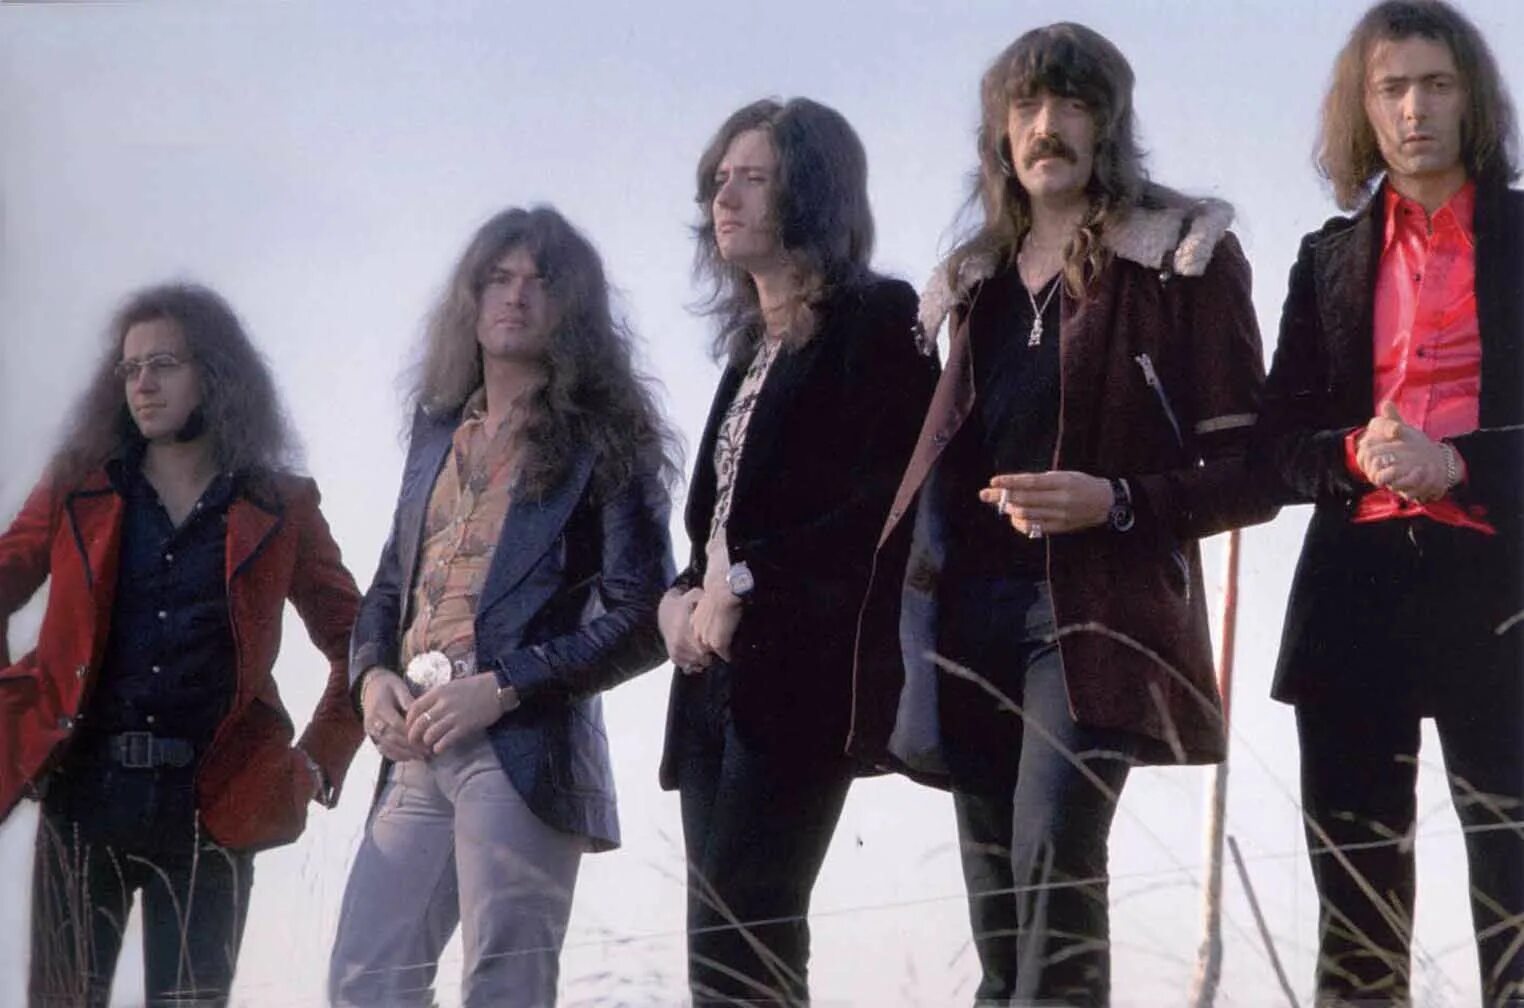 Ди перпл. Дип перпл. Группа Deep Purple 1974. Рок группа дип перпл. Группа Deep Purple 1973.